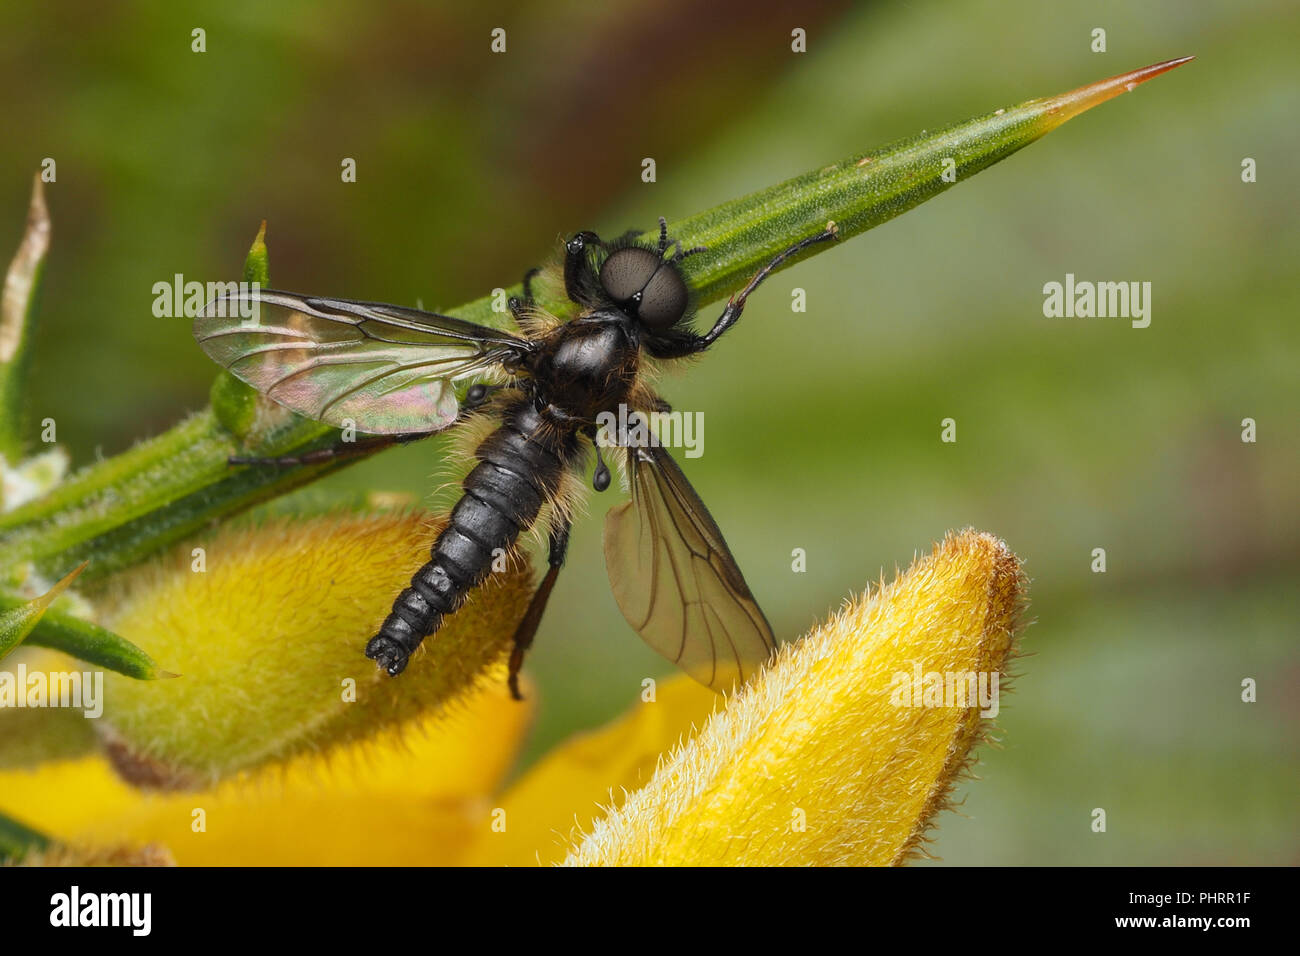 Bibio sp. fly perched on gorse bush. Tipperary, Ireland Stock Photo